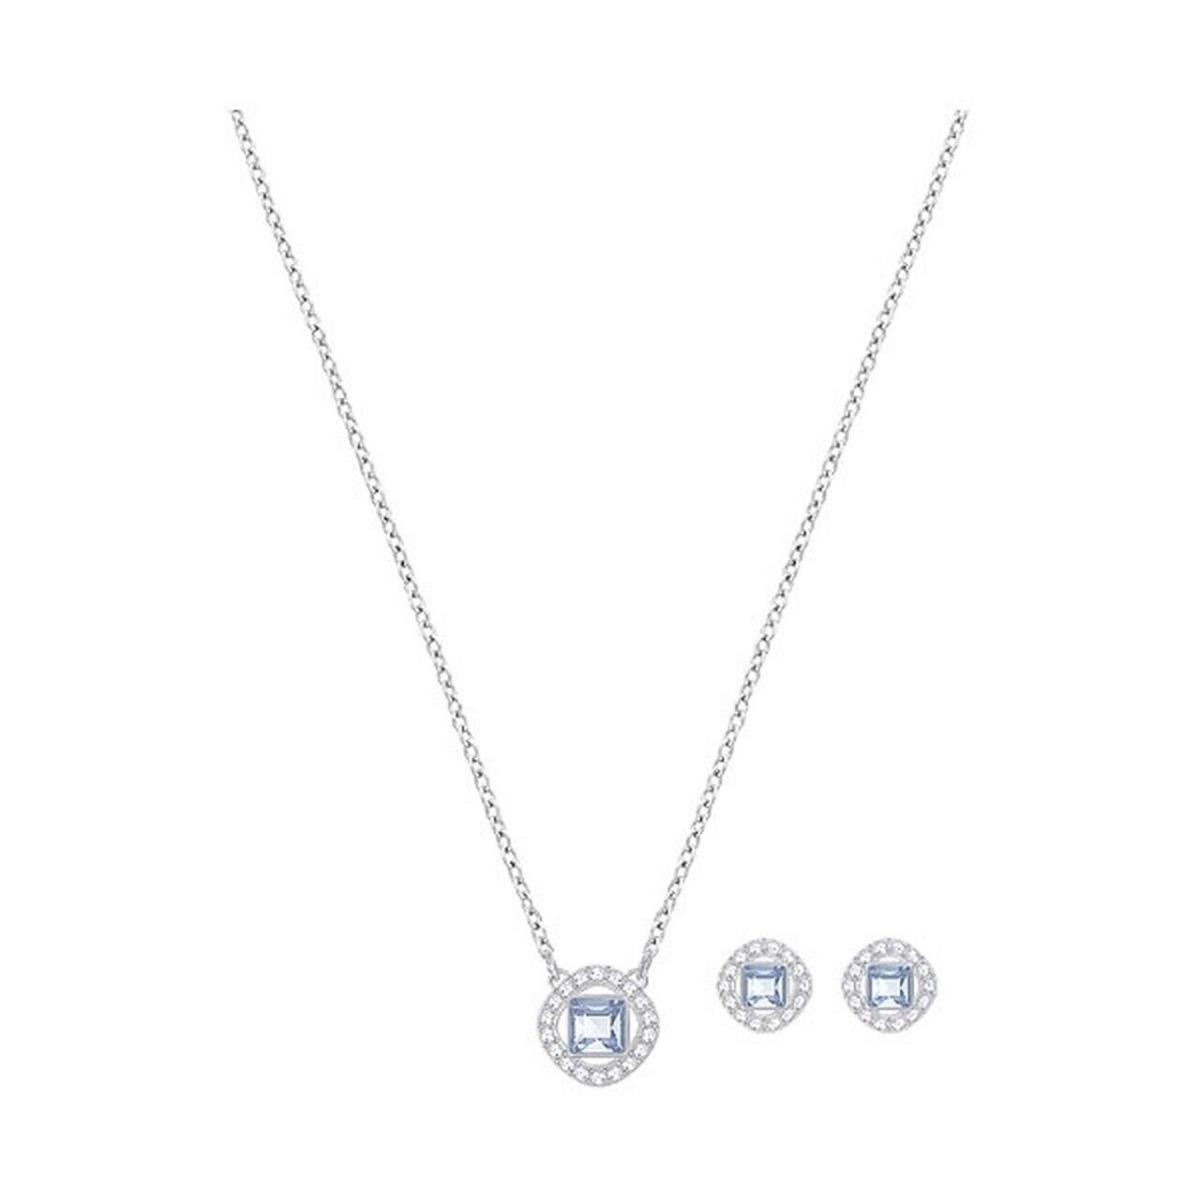 Swarovski Angelic Square Pendant Necklace Earring Jewelry Set Rhodium Plated 5289513 White / Blue